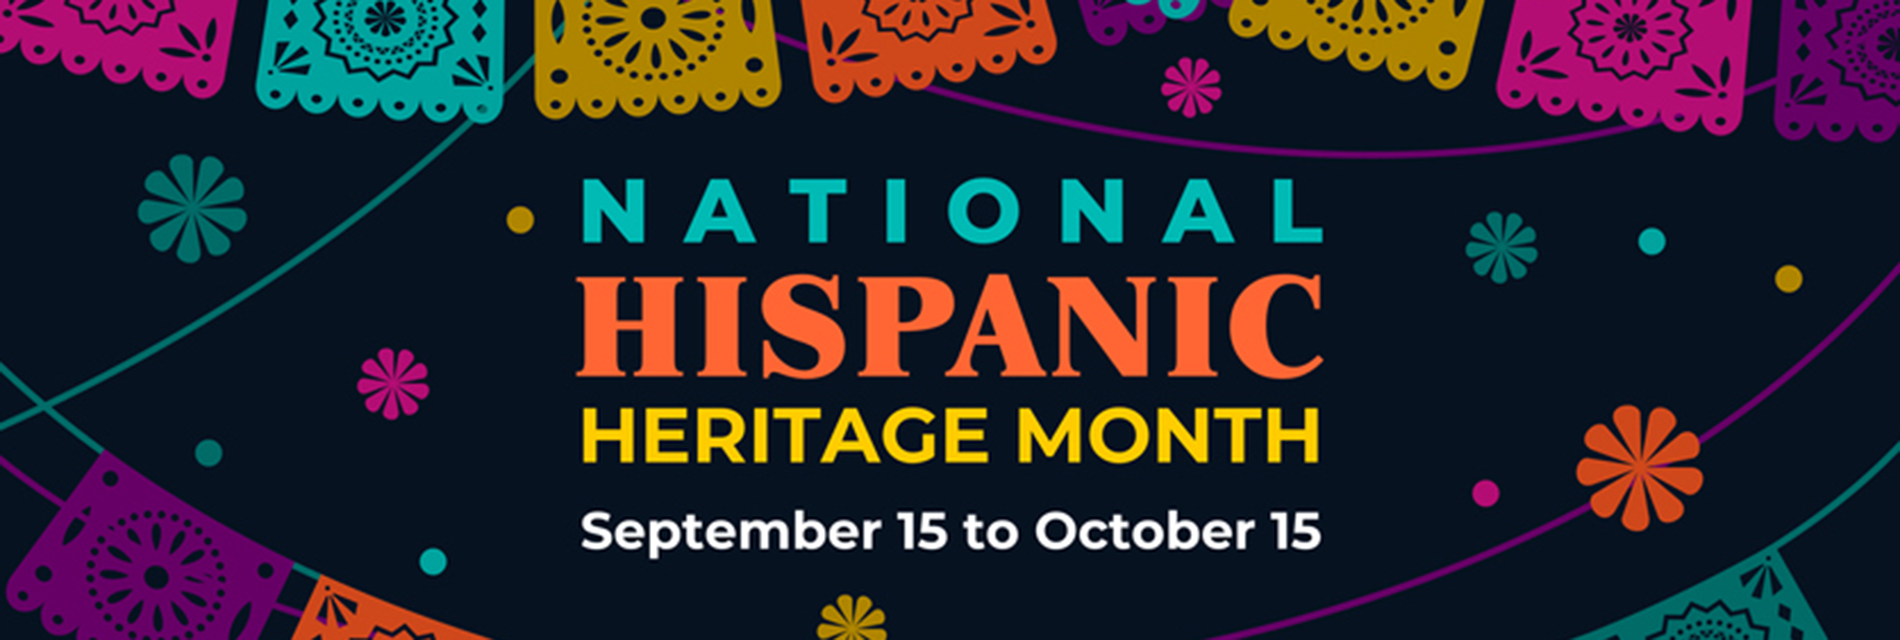 Hispanic Heritage Month Slider.png